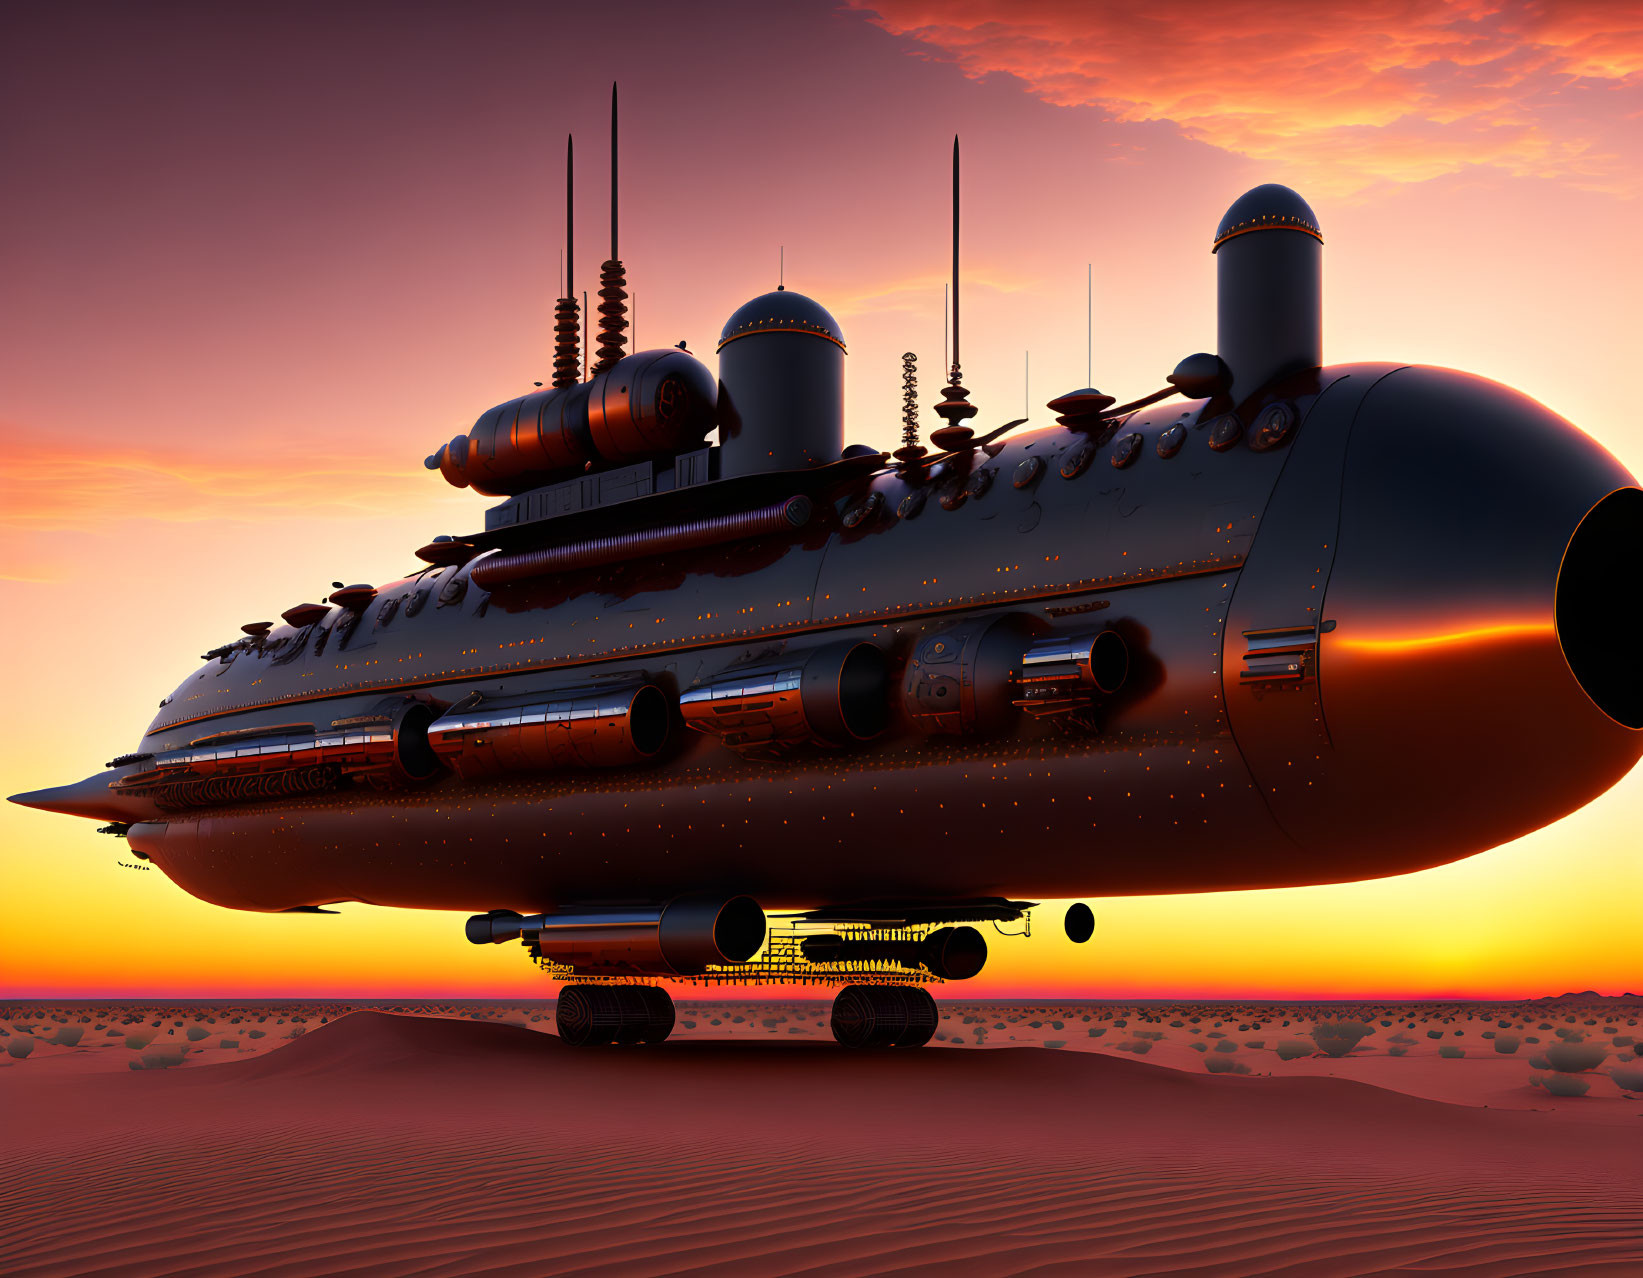 Sleek futuristic submarine-like vehicle in desert sunset